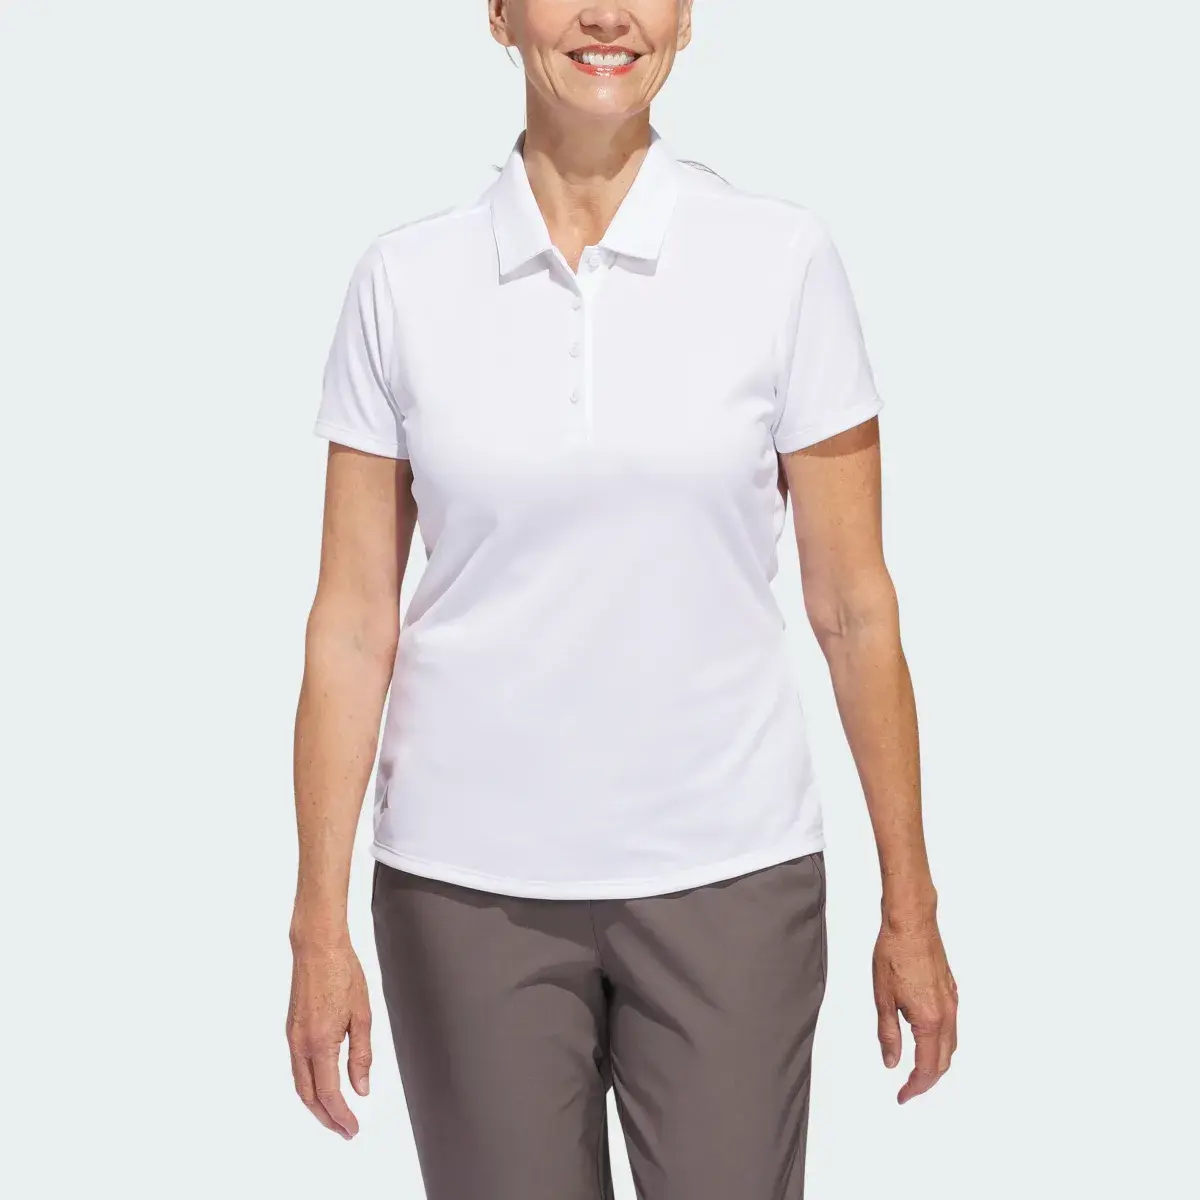 Adidas Women's Solid Performance Short Sleeve Polo Shirt. 1